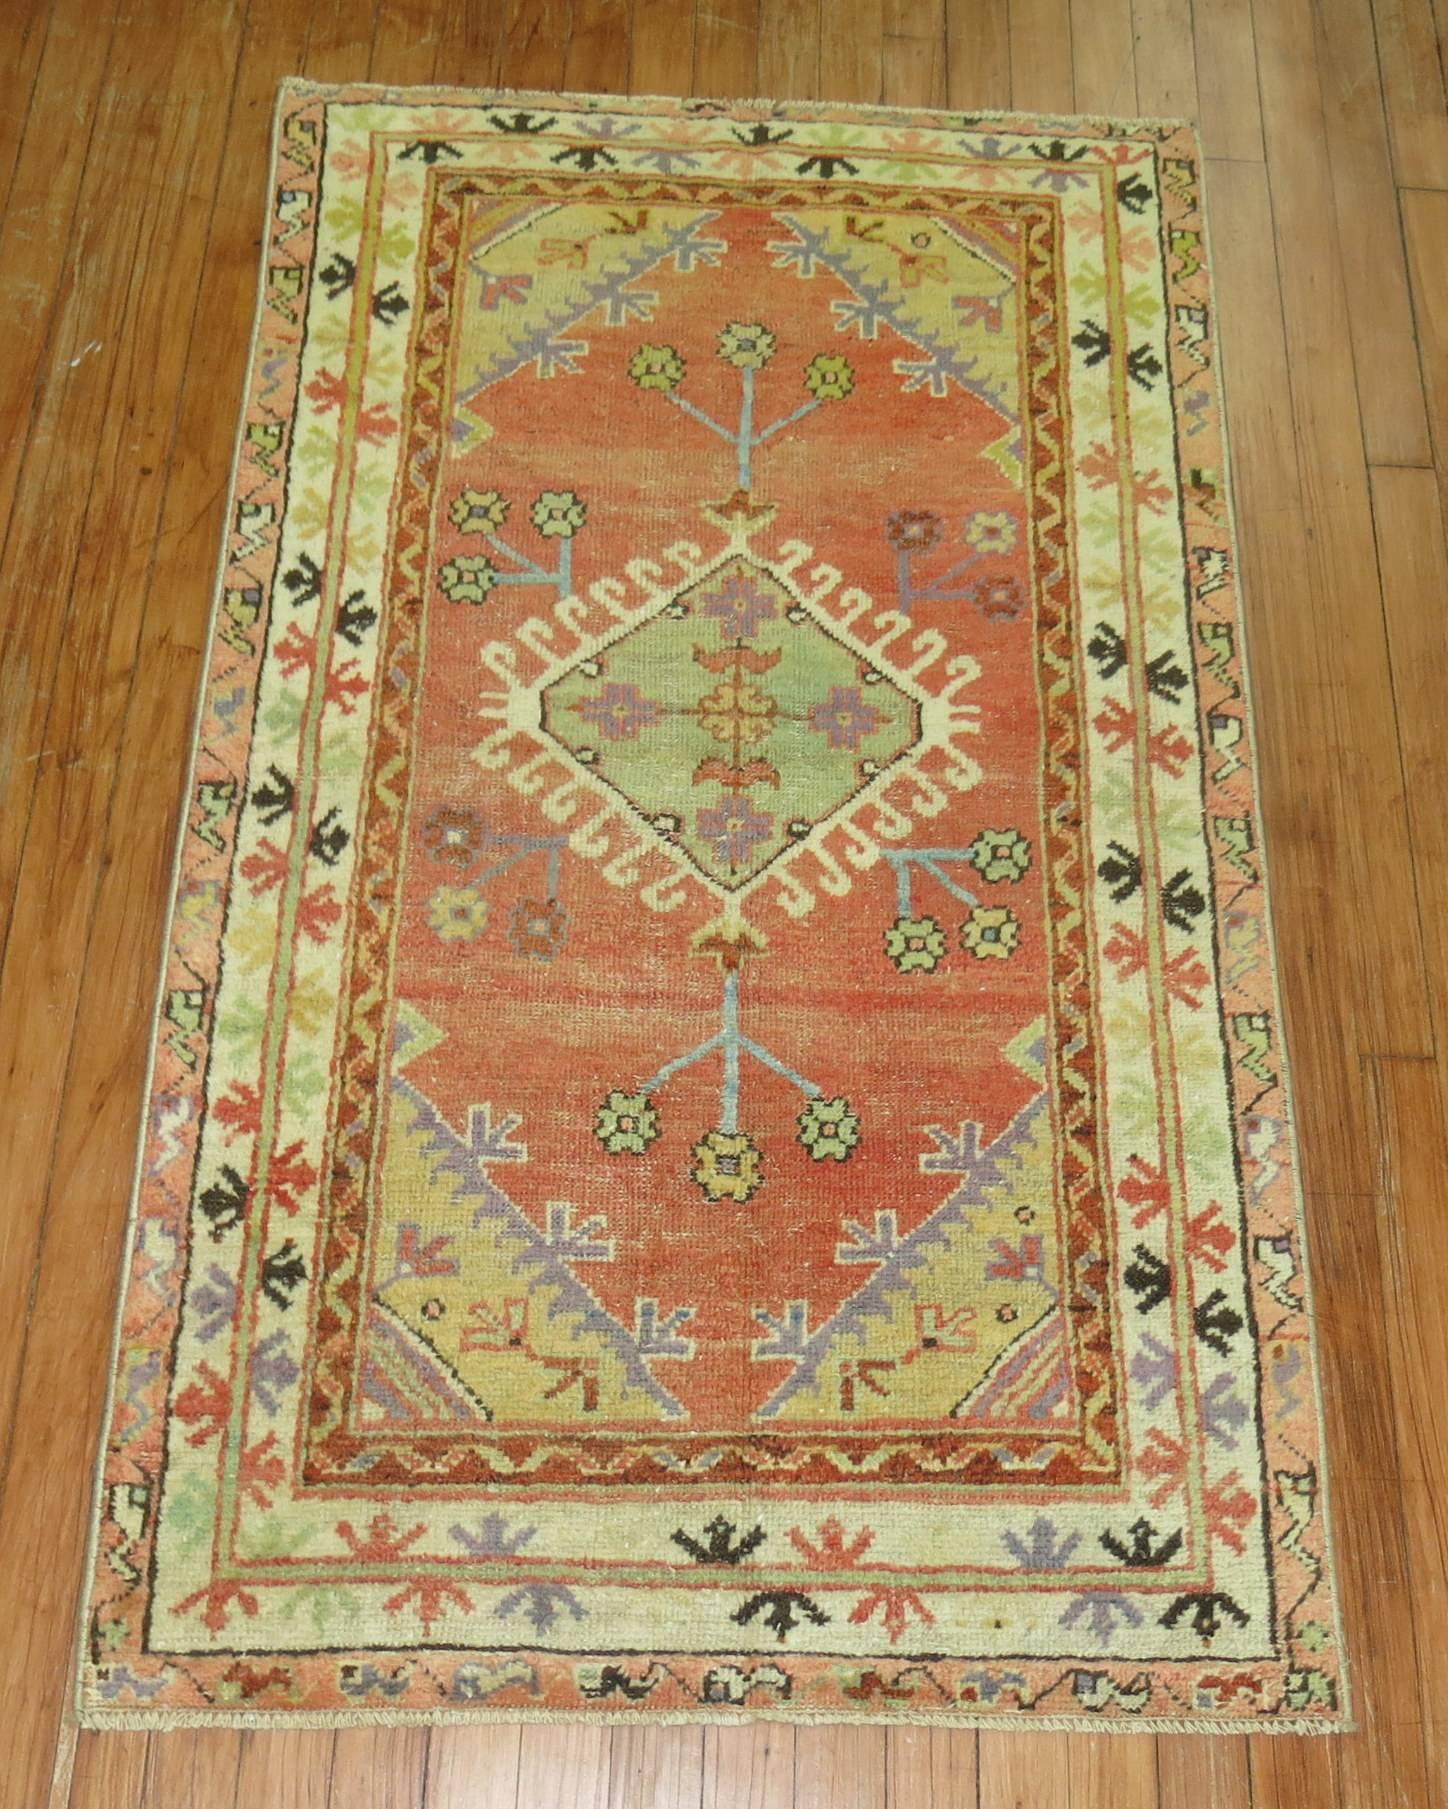 Colorful vintage Turkish Oushak throw rug.